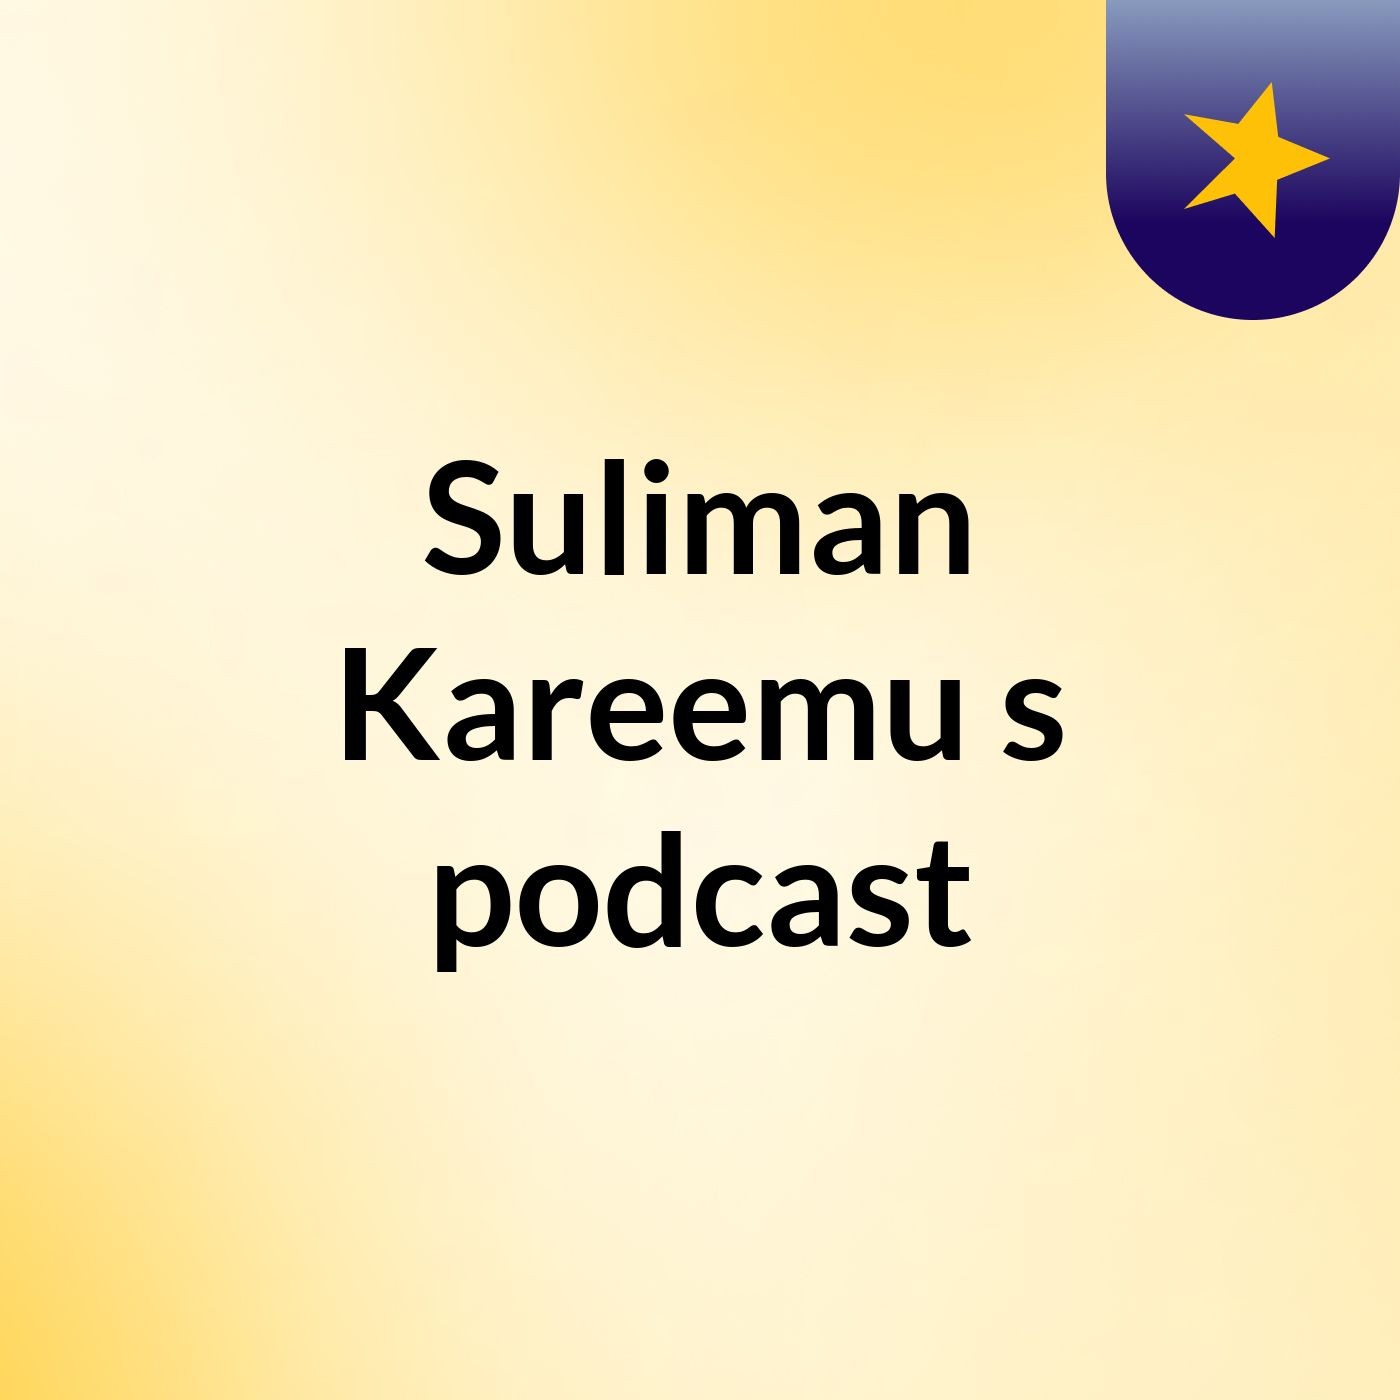 Episode 2 - Suliman Kareemu's podcast